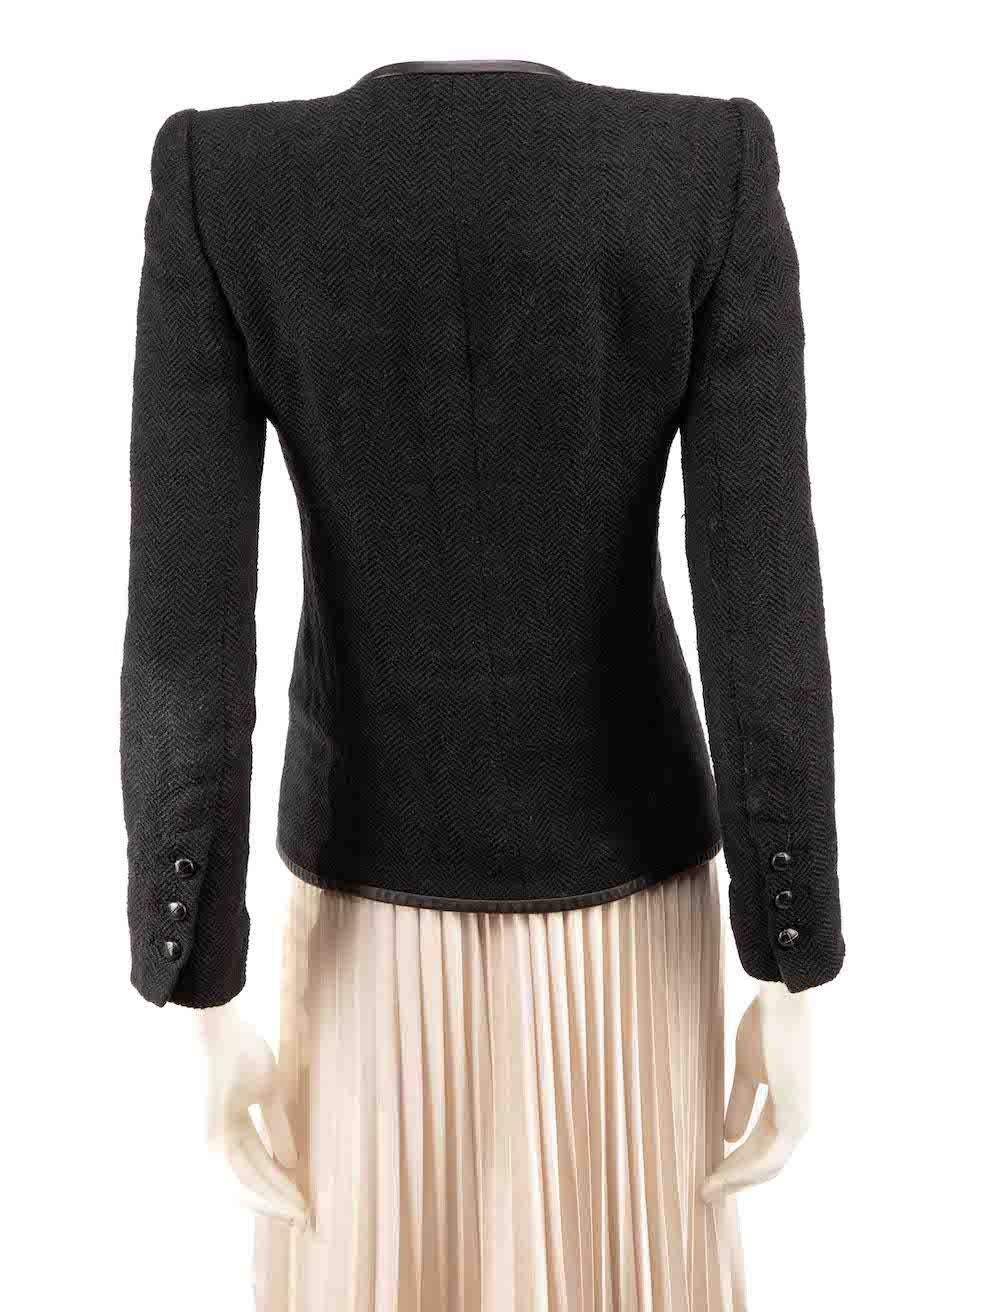 Isabel Marant Black Herringbone Tweed Jacket Size S In Good Condition For Sale In London, GB